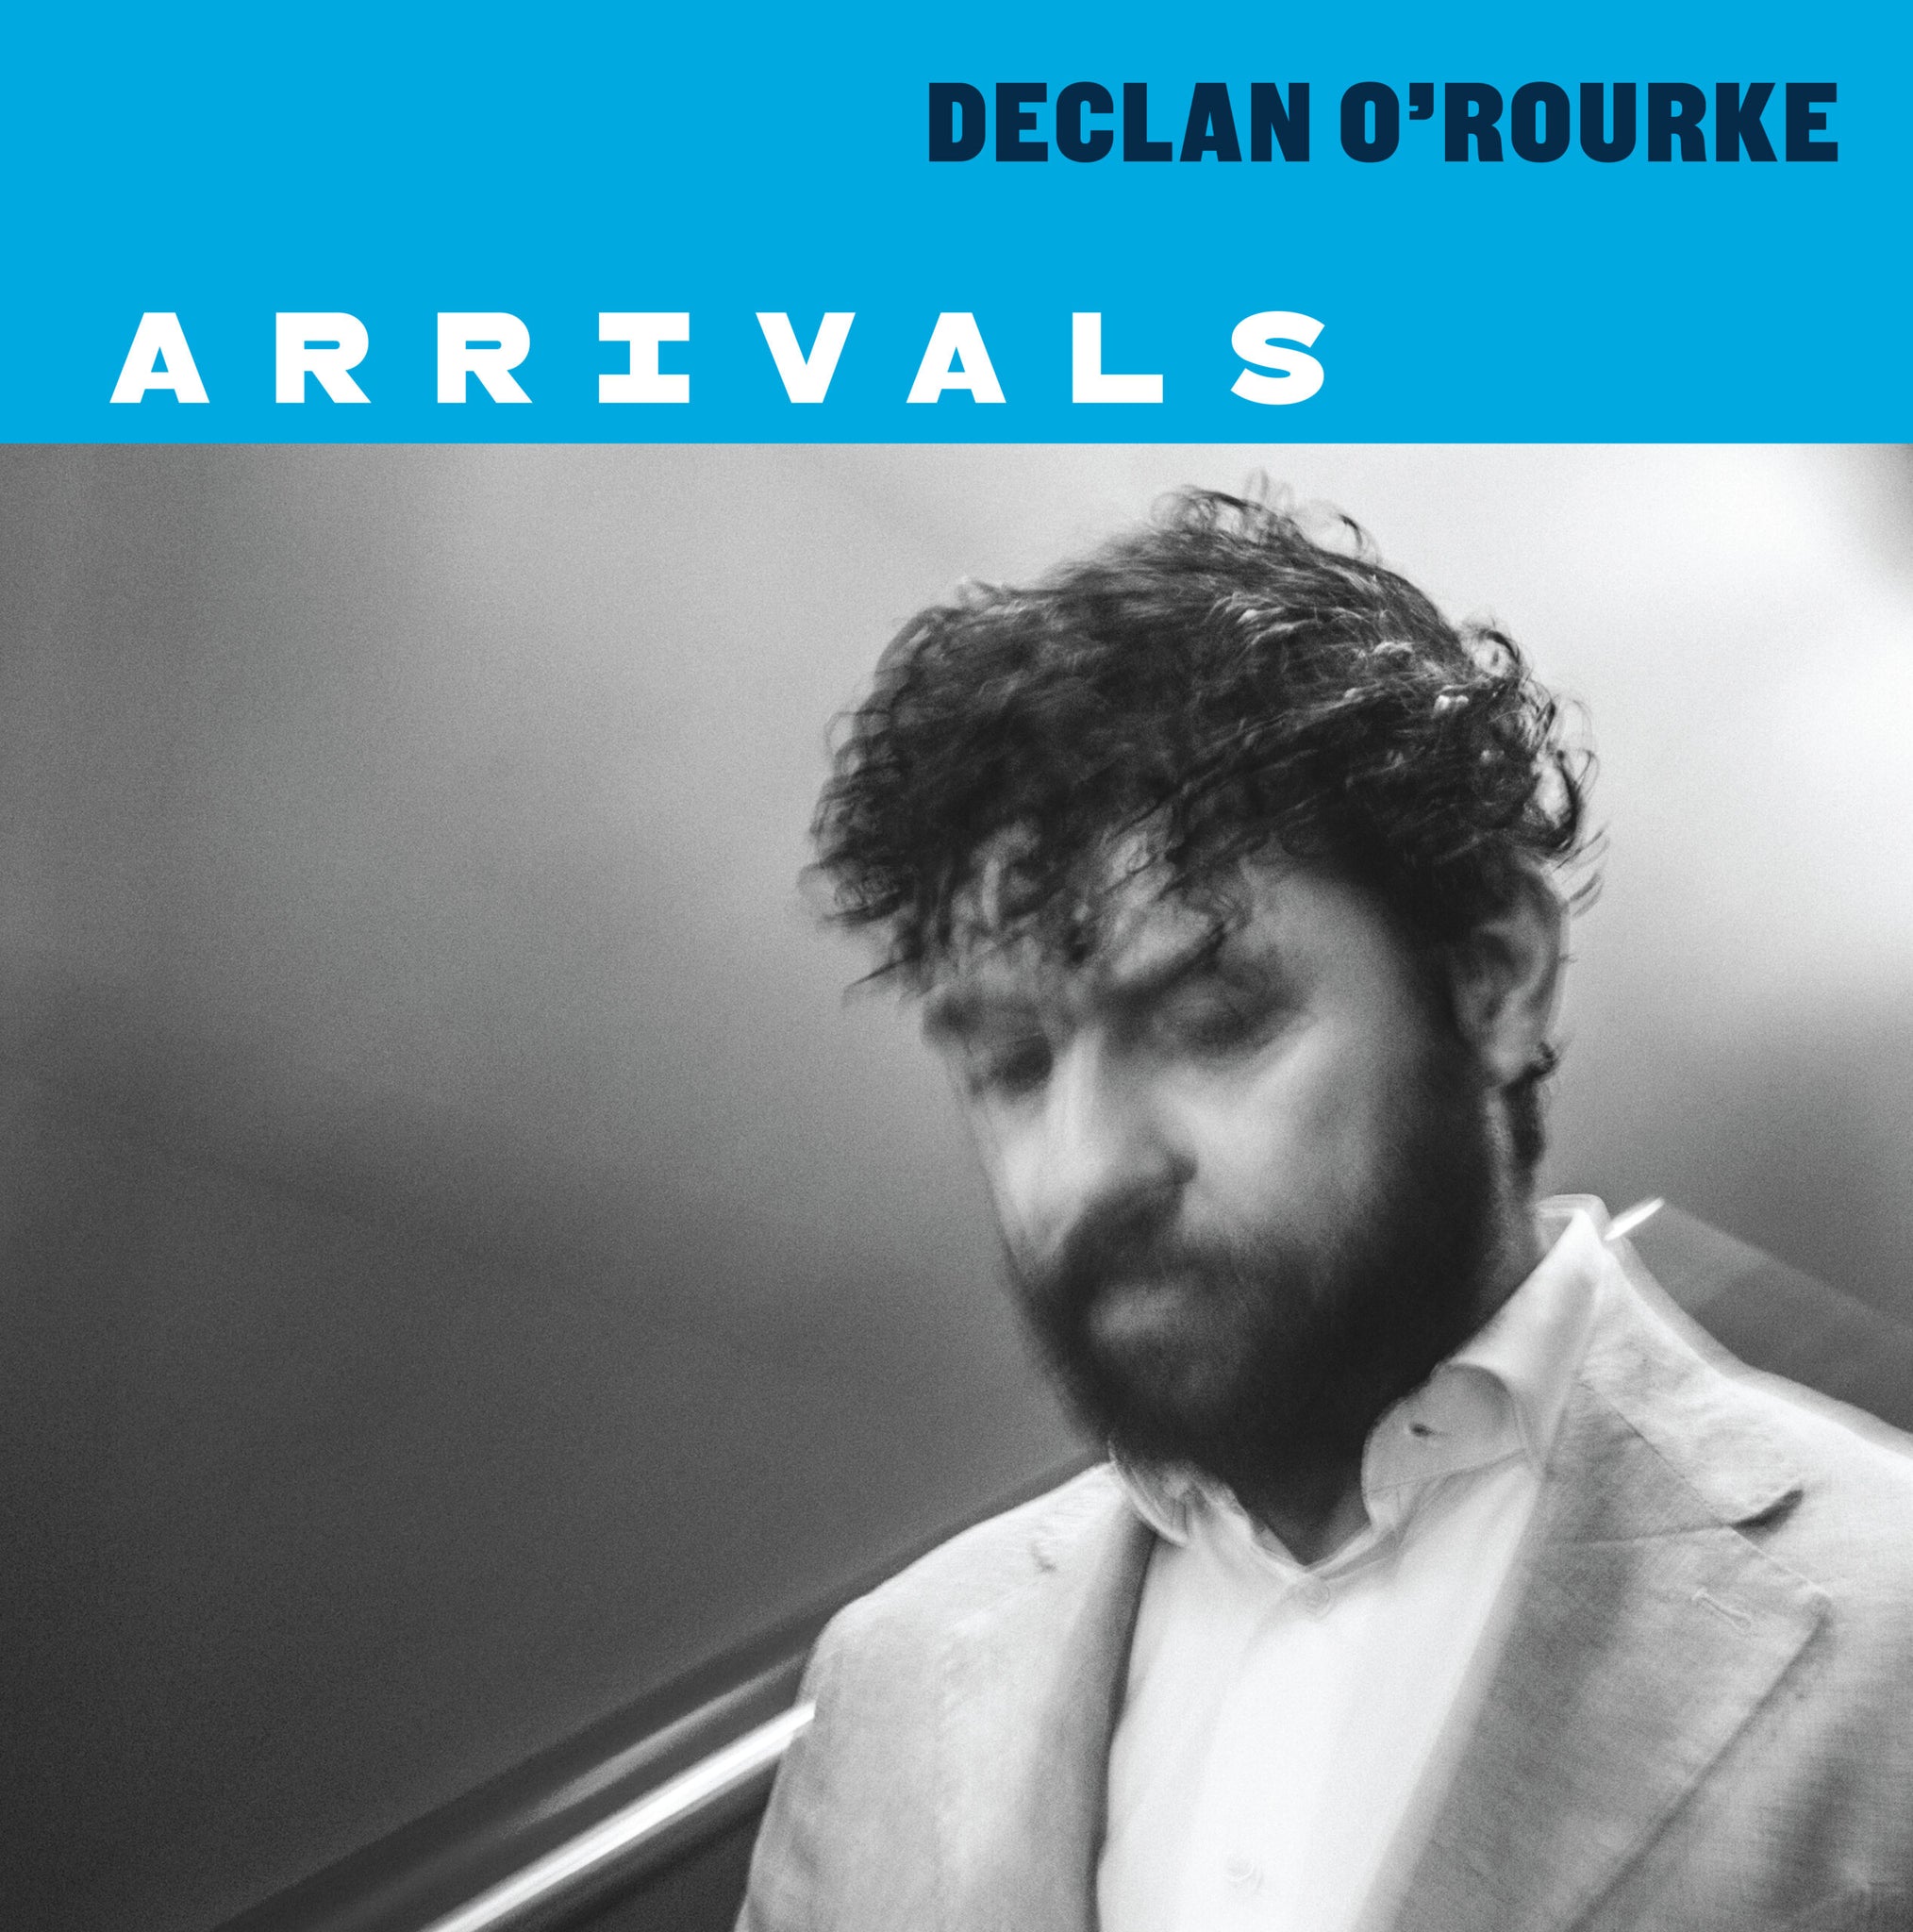 DECLAN O'ROURKE - Arrivals - LP - Vinyl